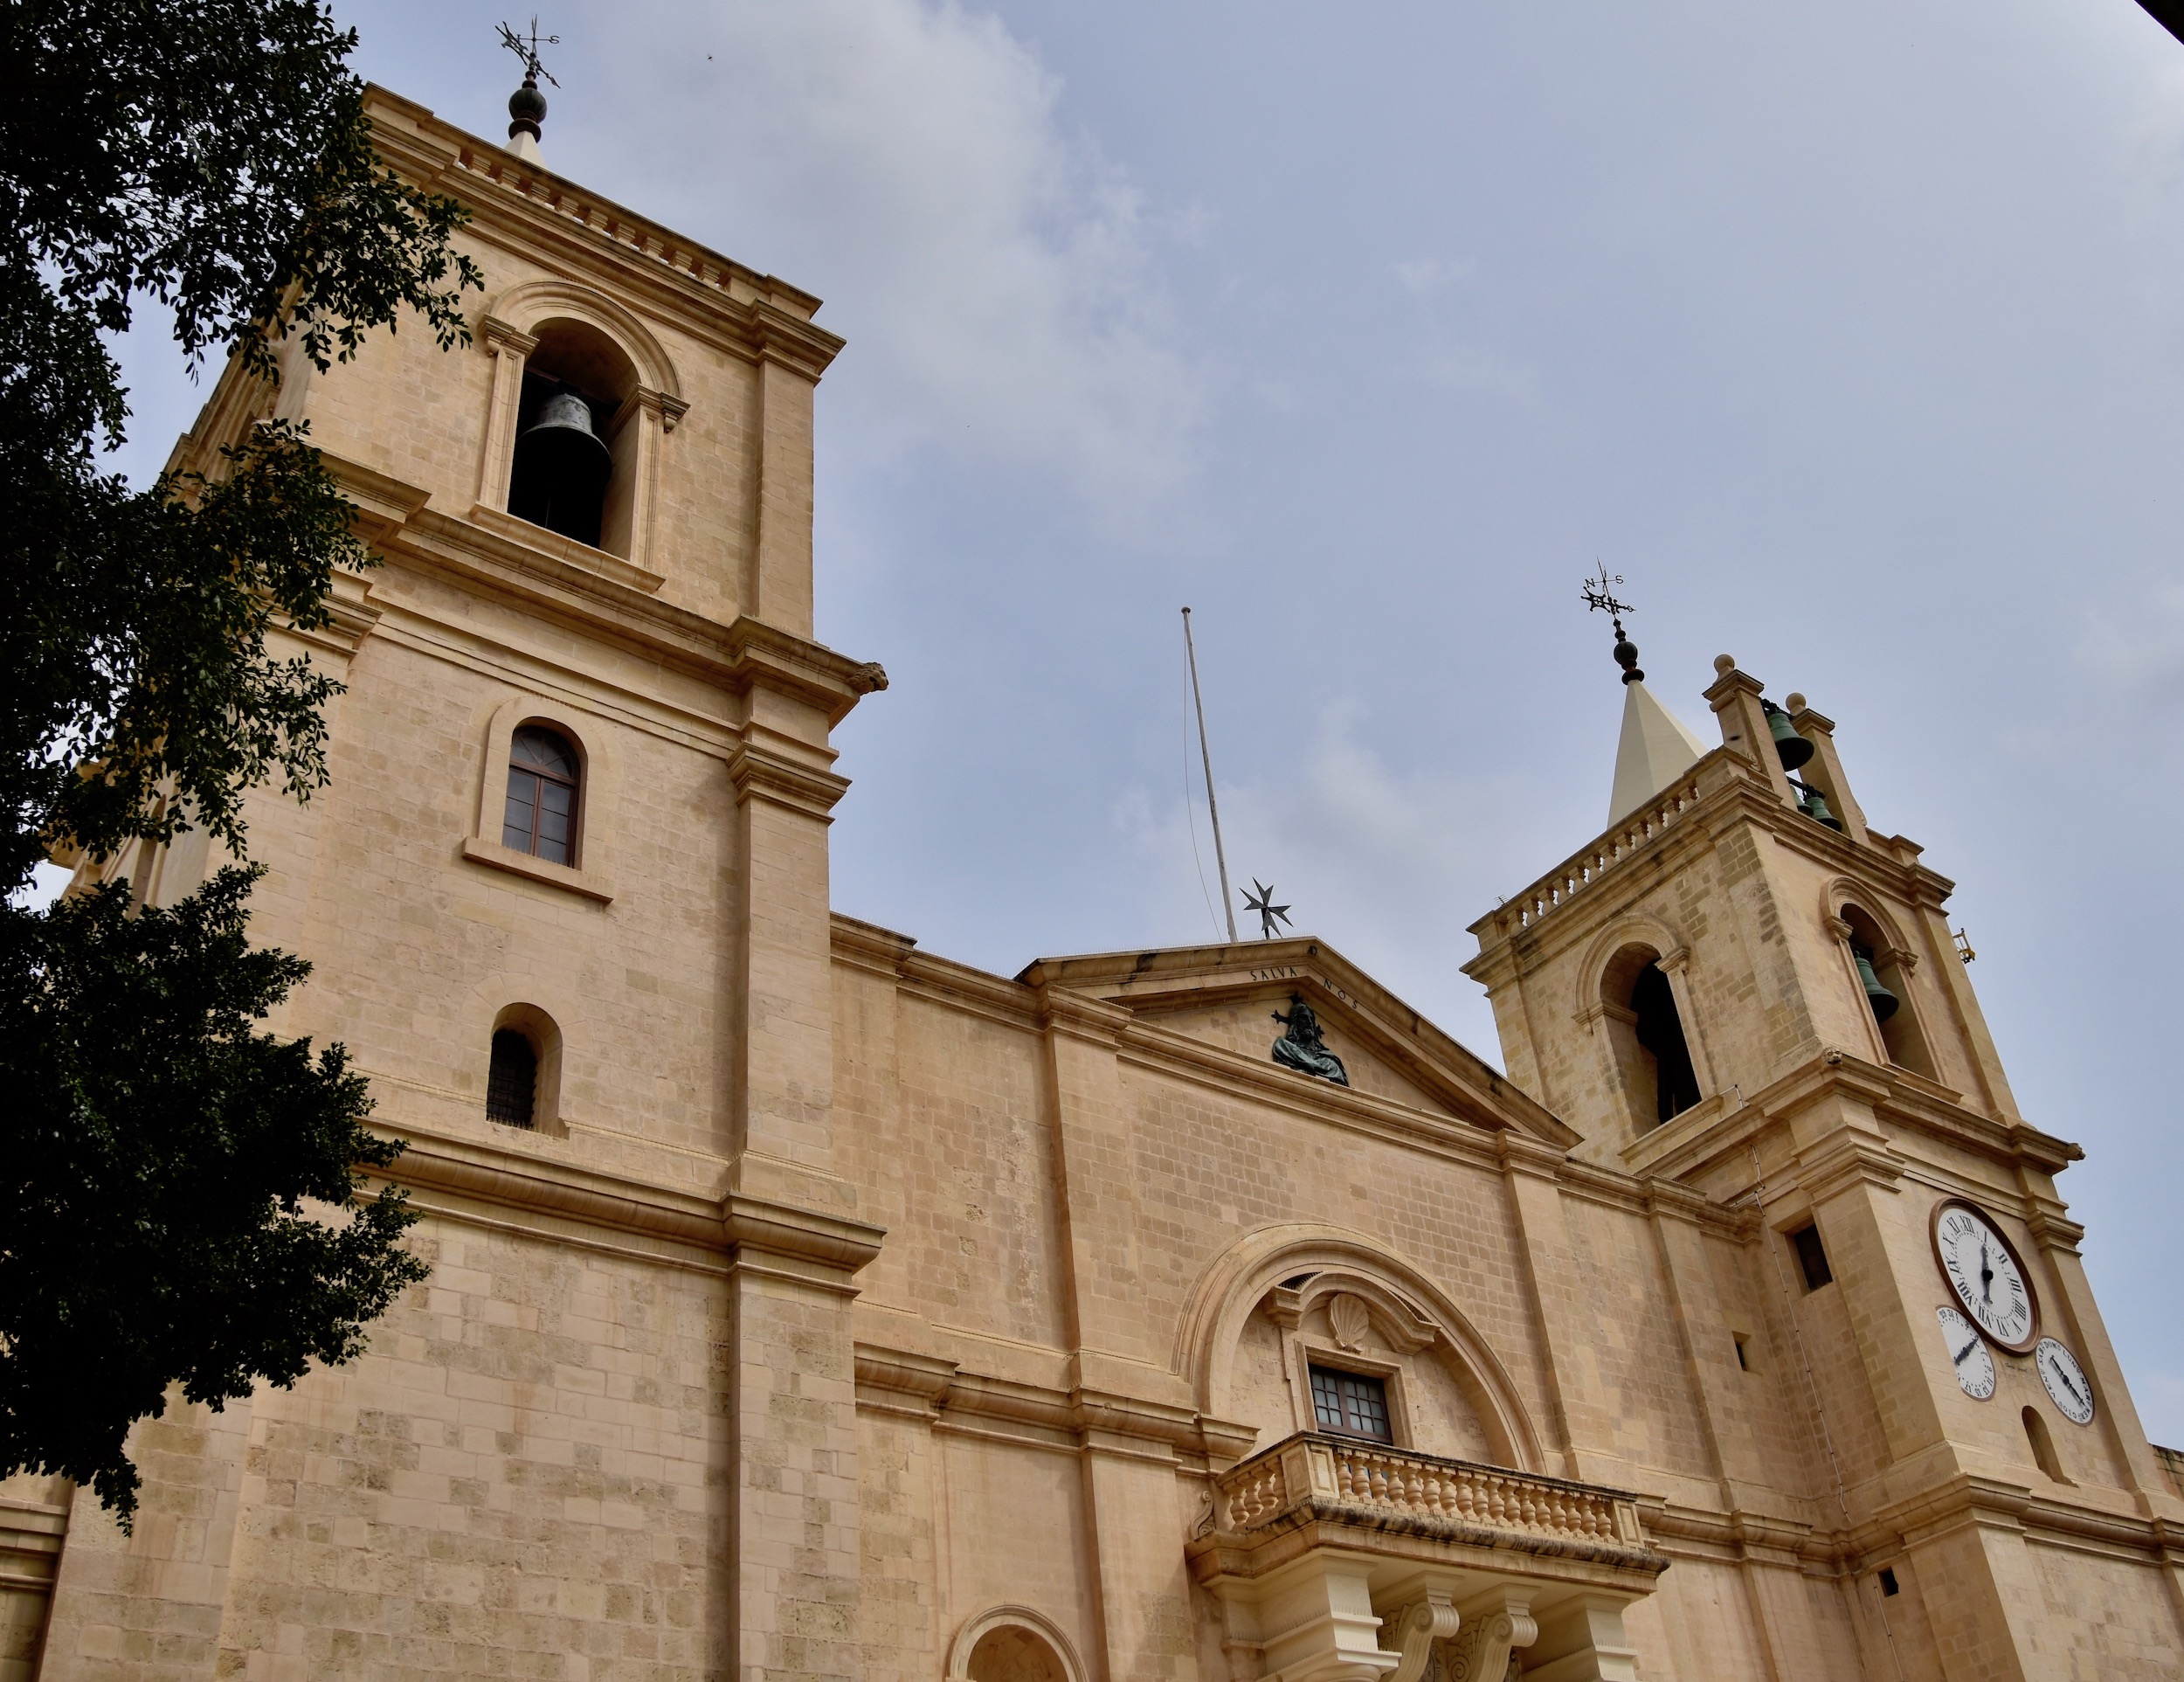 Saint John Co-Cathedral as seen on the Valletta Walk